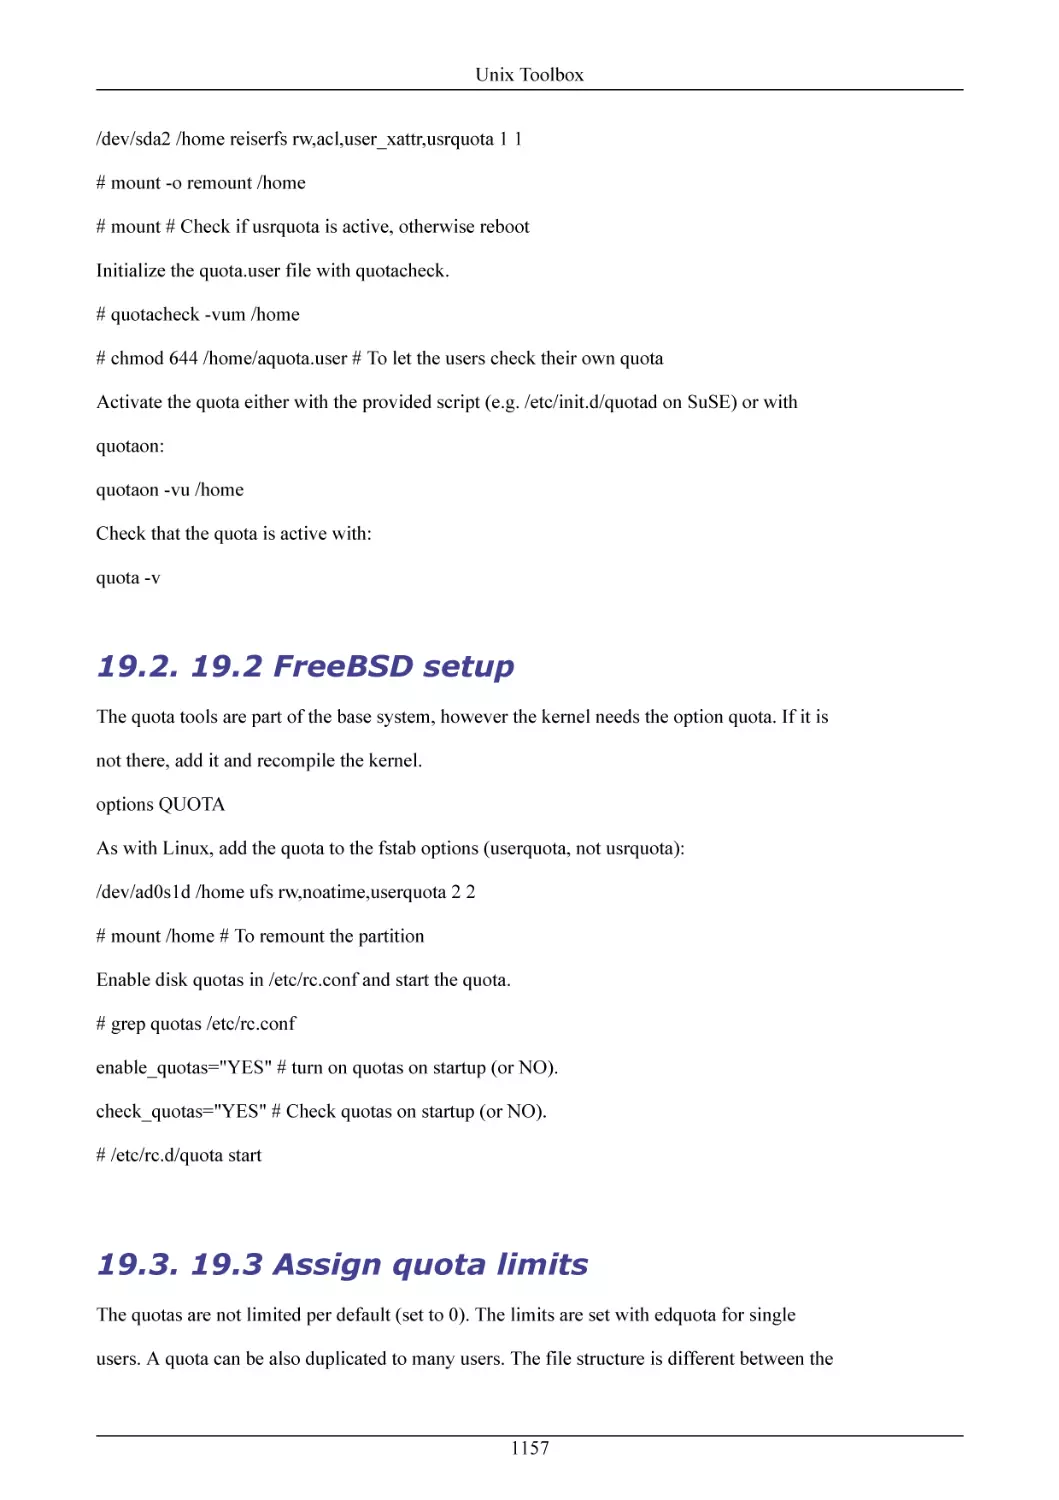 19.2 FreeBSD setup
19.3 Assign quota limits